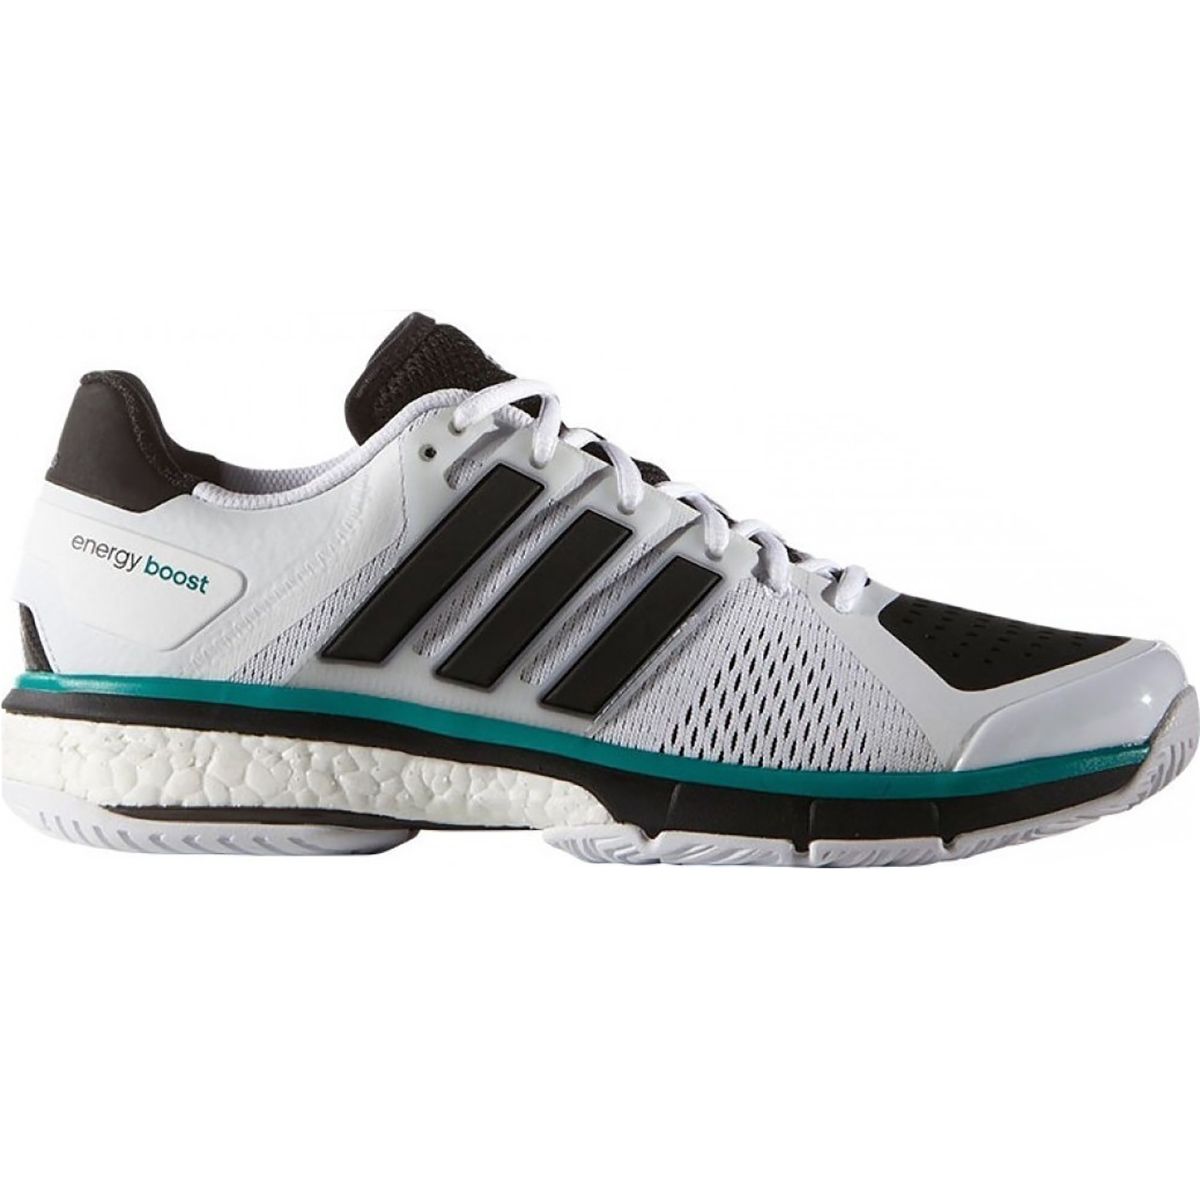 adidas Energy Boost Men's Tennis Shoes S82693